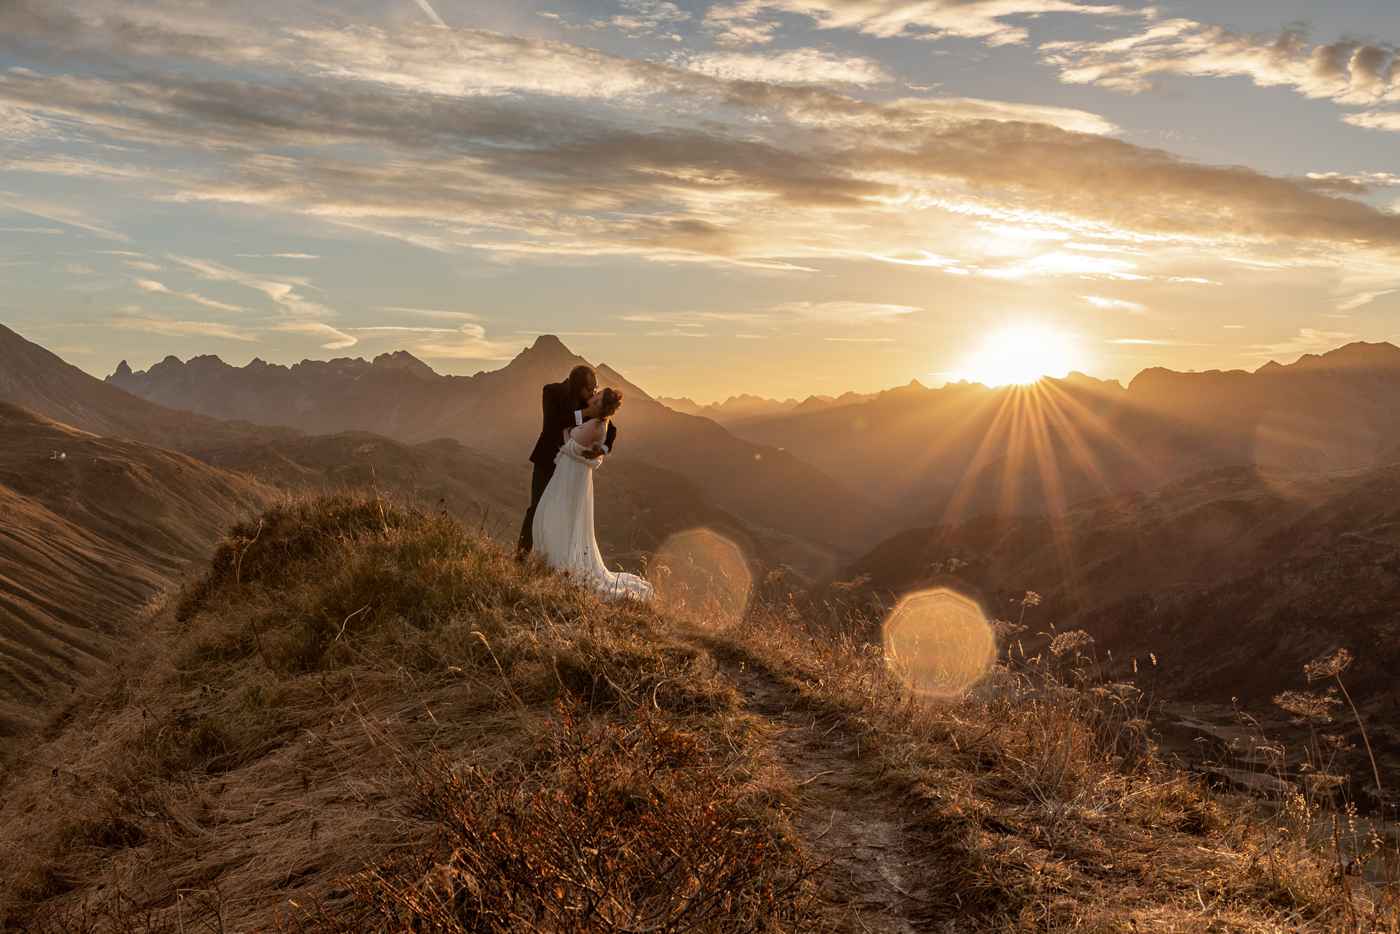 HIKING WEDDING – SUNRISE TO SUNSET ELOPEMENT IN AUSTRIA